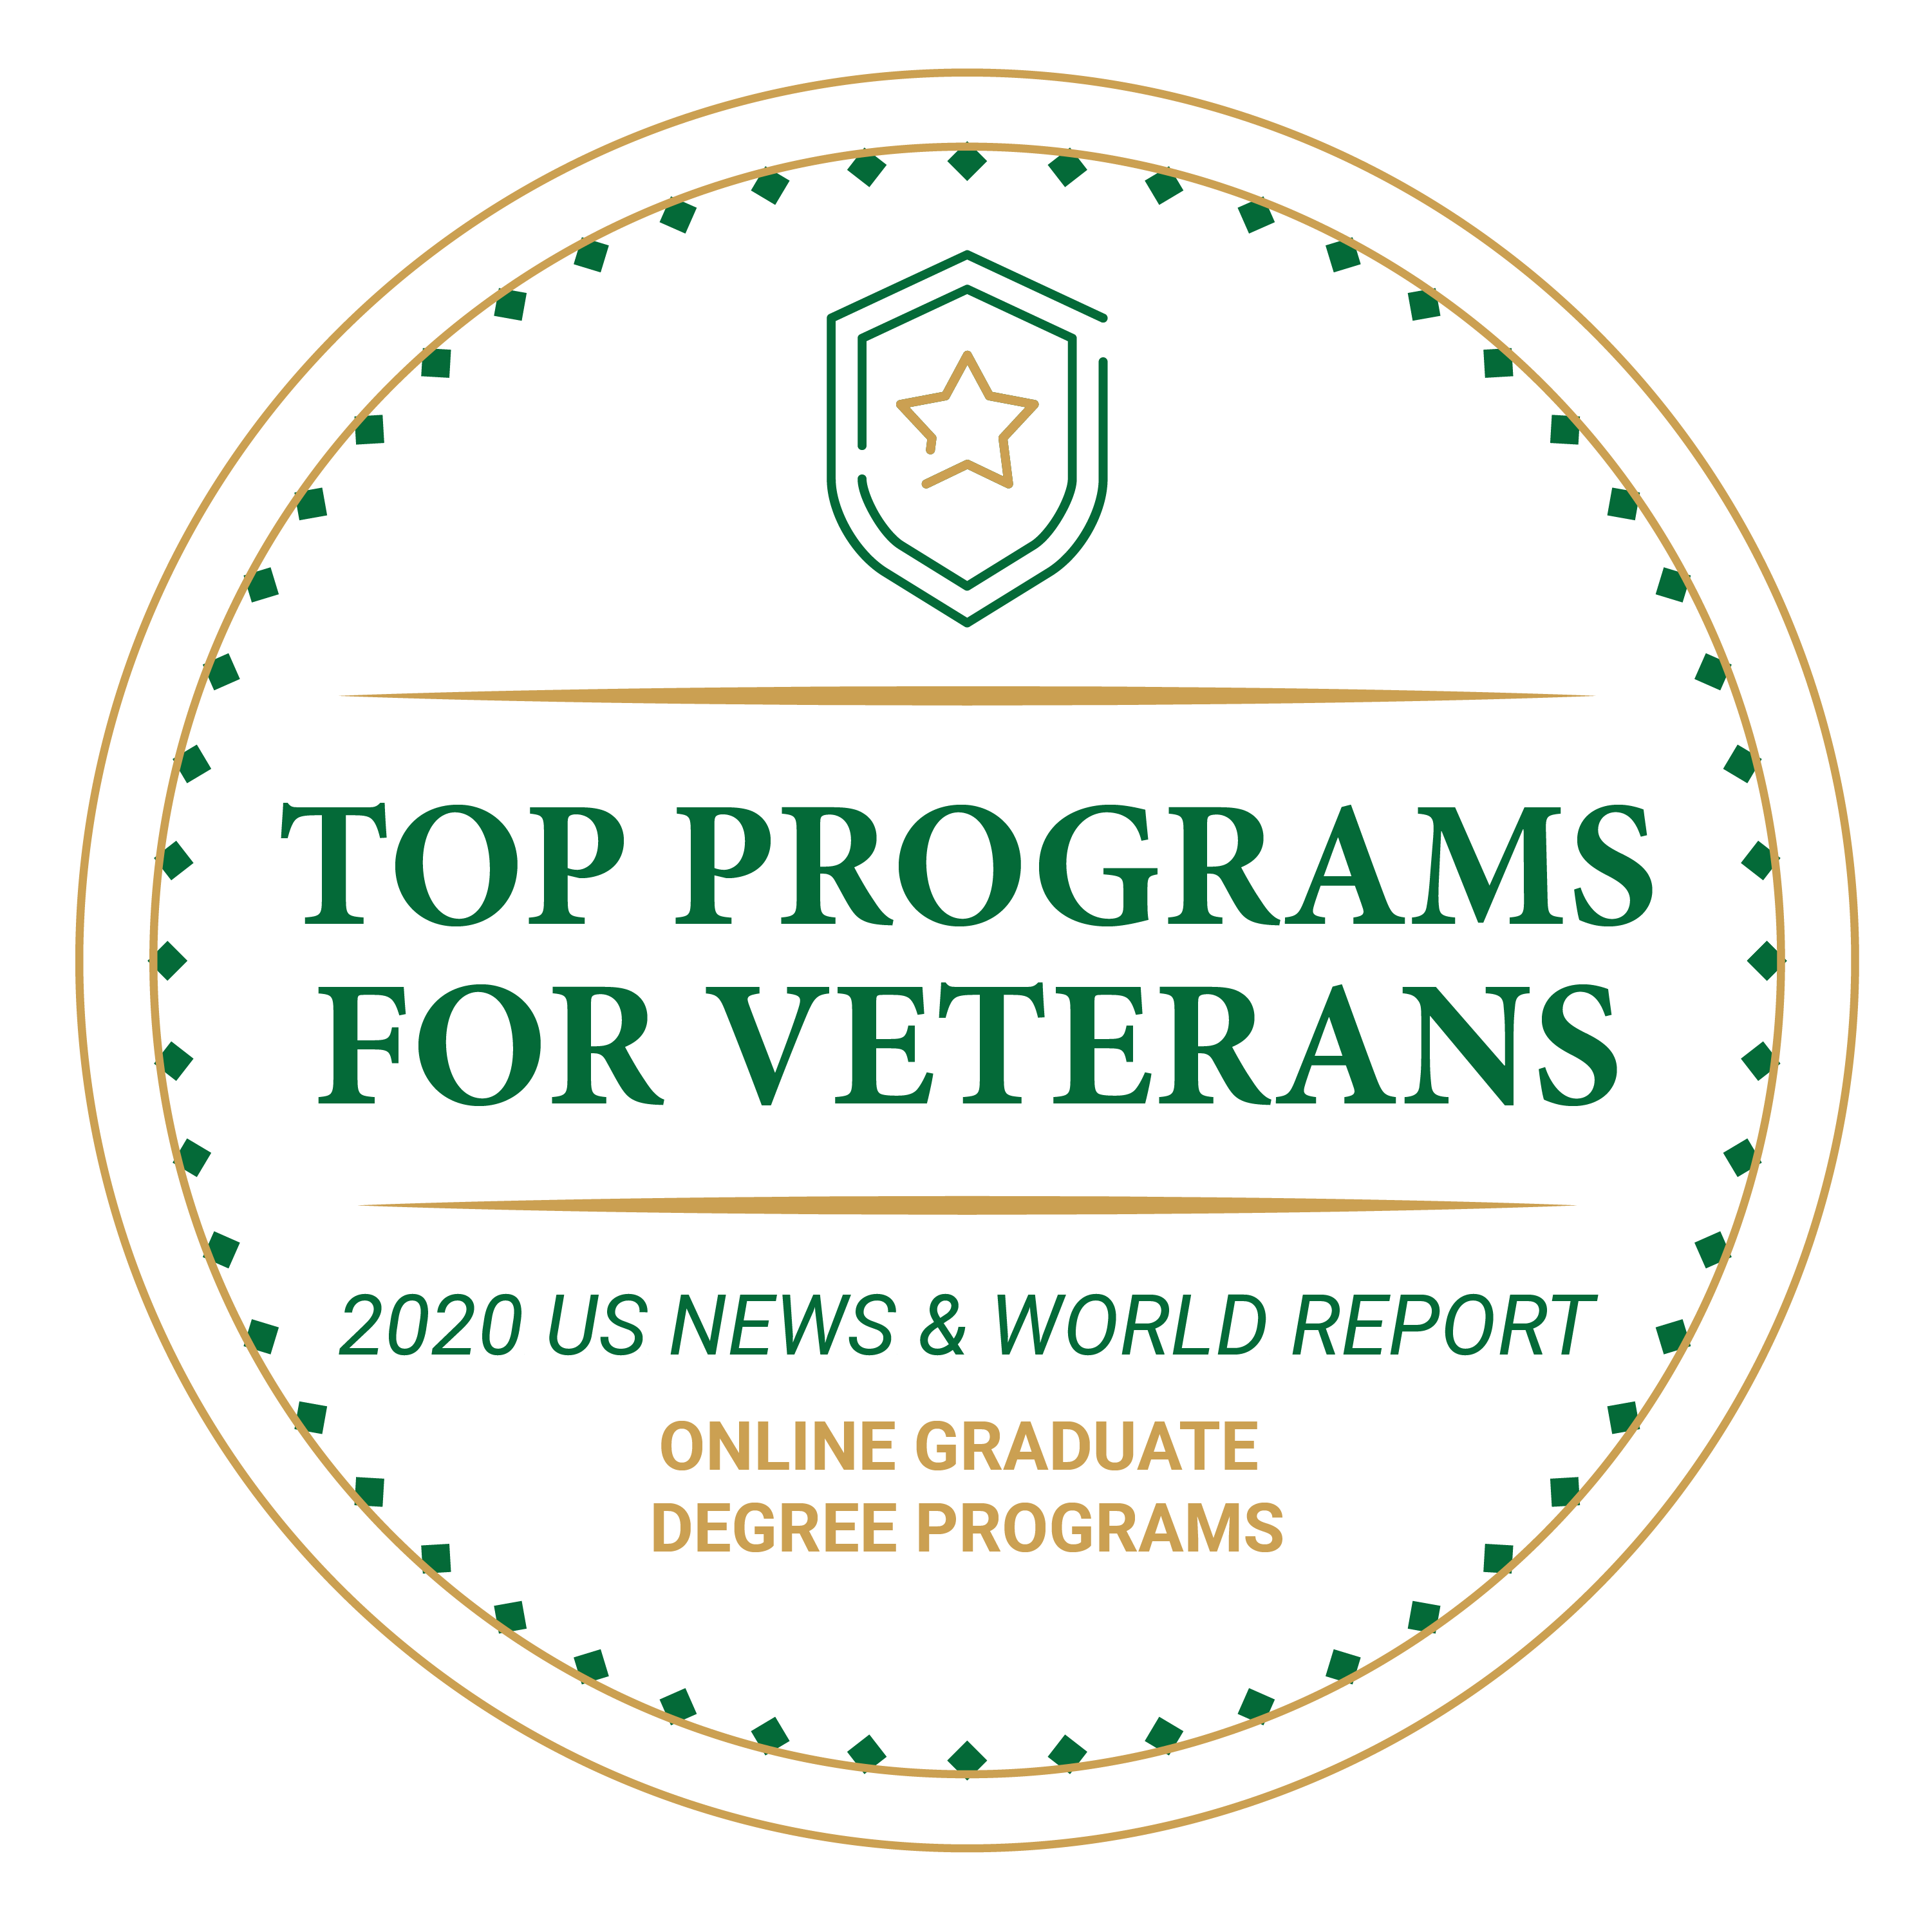 2020 U.S. News & World Report Top Programs for Veterans Online Graduate Degree Programs